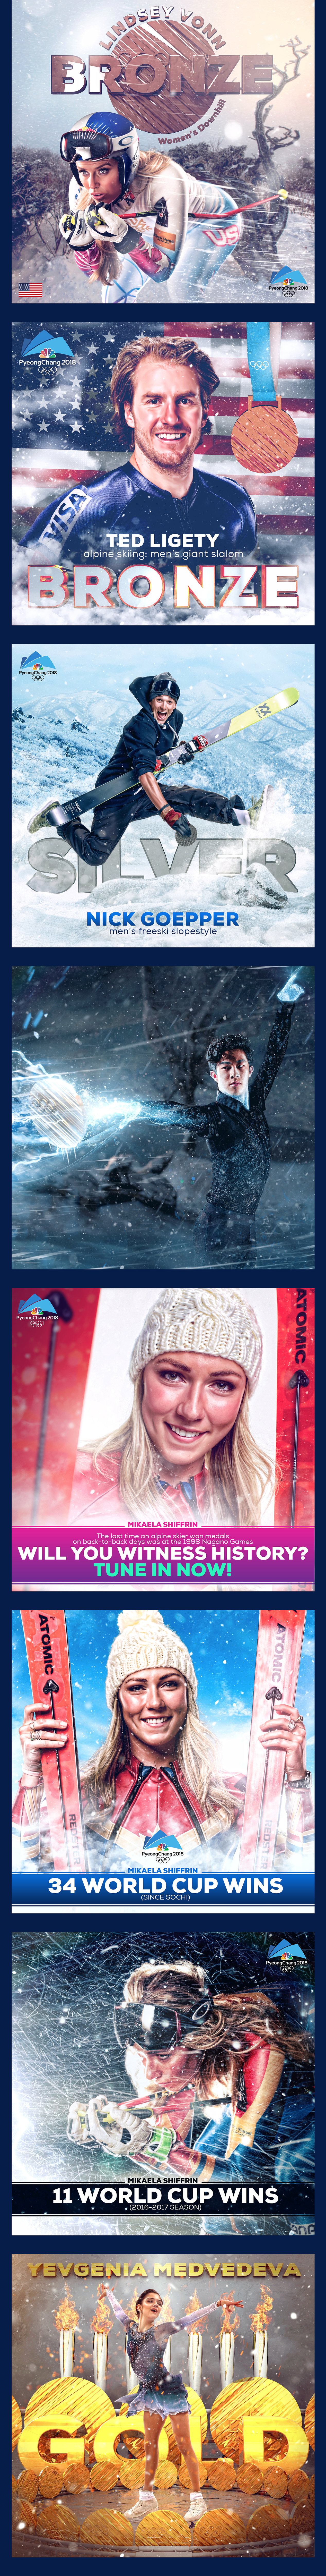 Olympics winter pyeongchang Snowboarding skiing Shaun White curling sports nbc social media